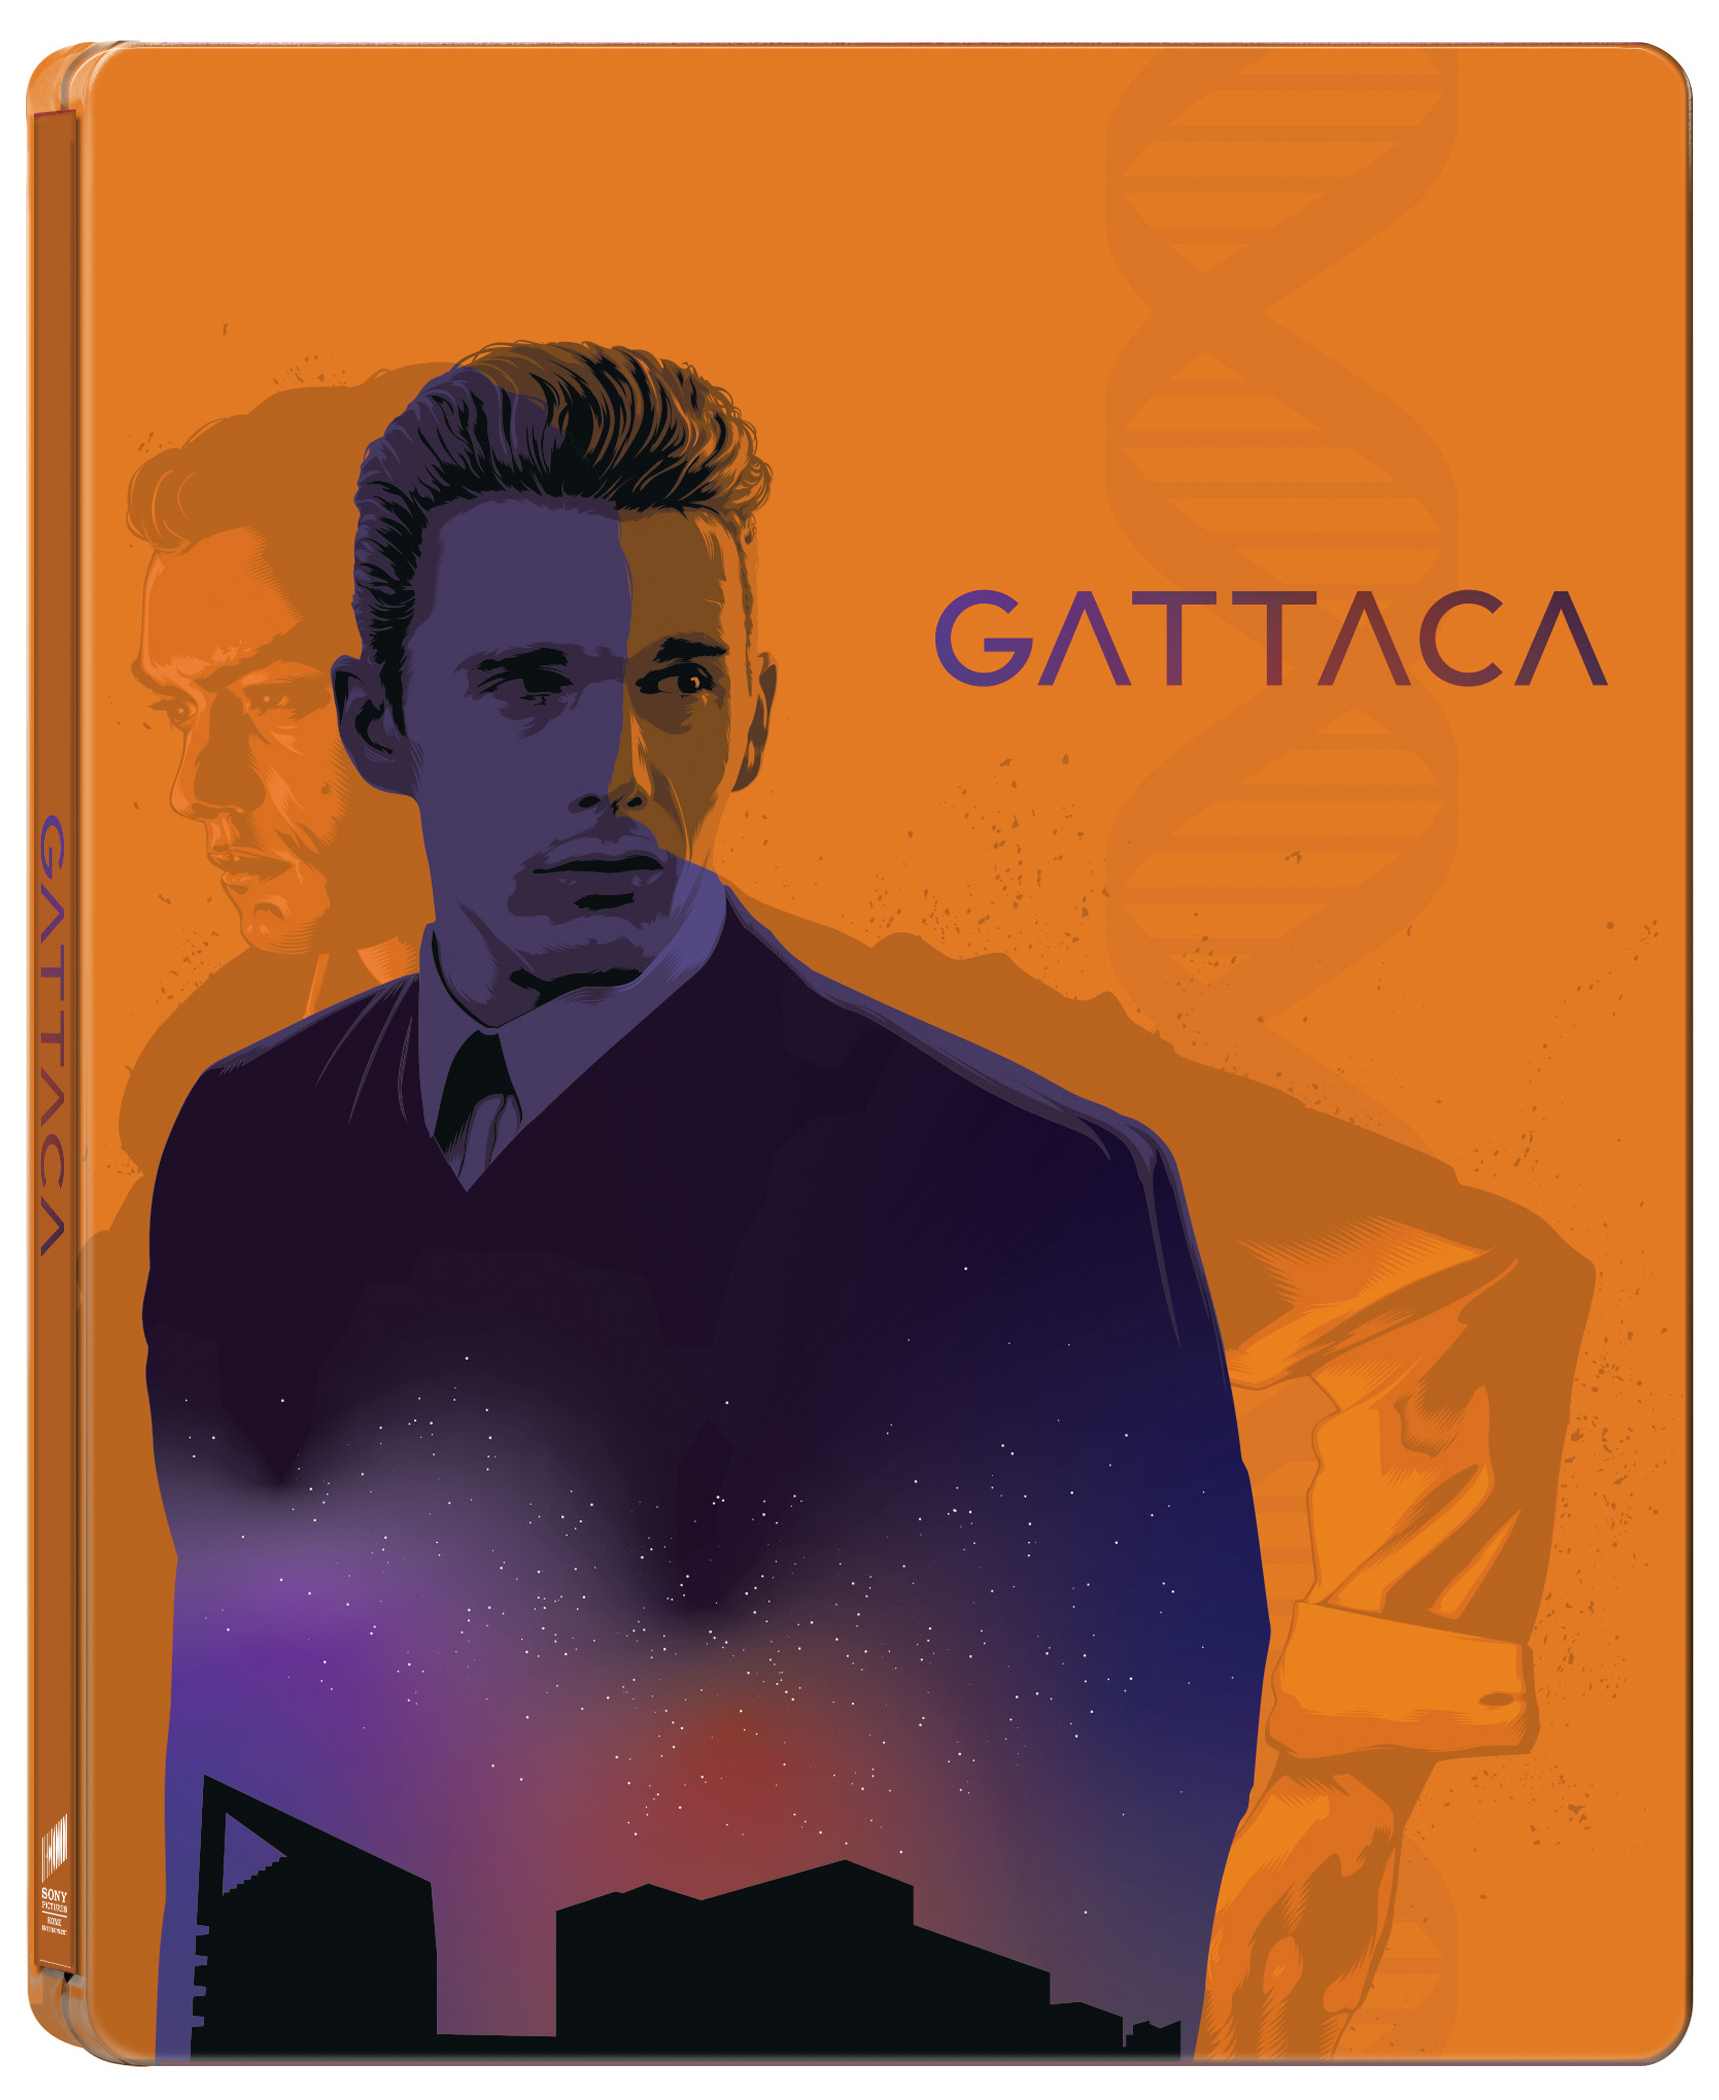 [Blu-ray] Gattaca 4K(2Disc: 4K UHD + BD) Steelbook LE